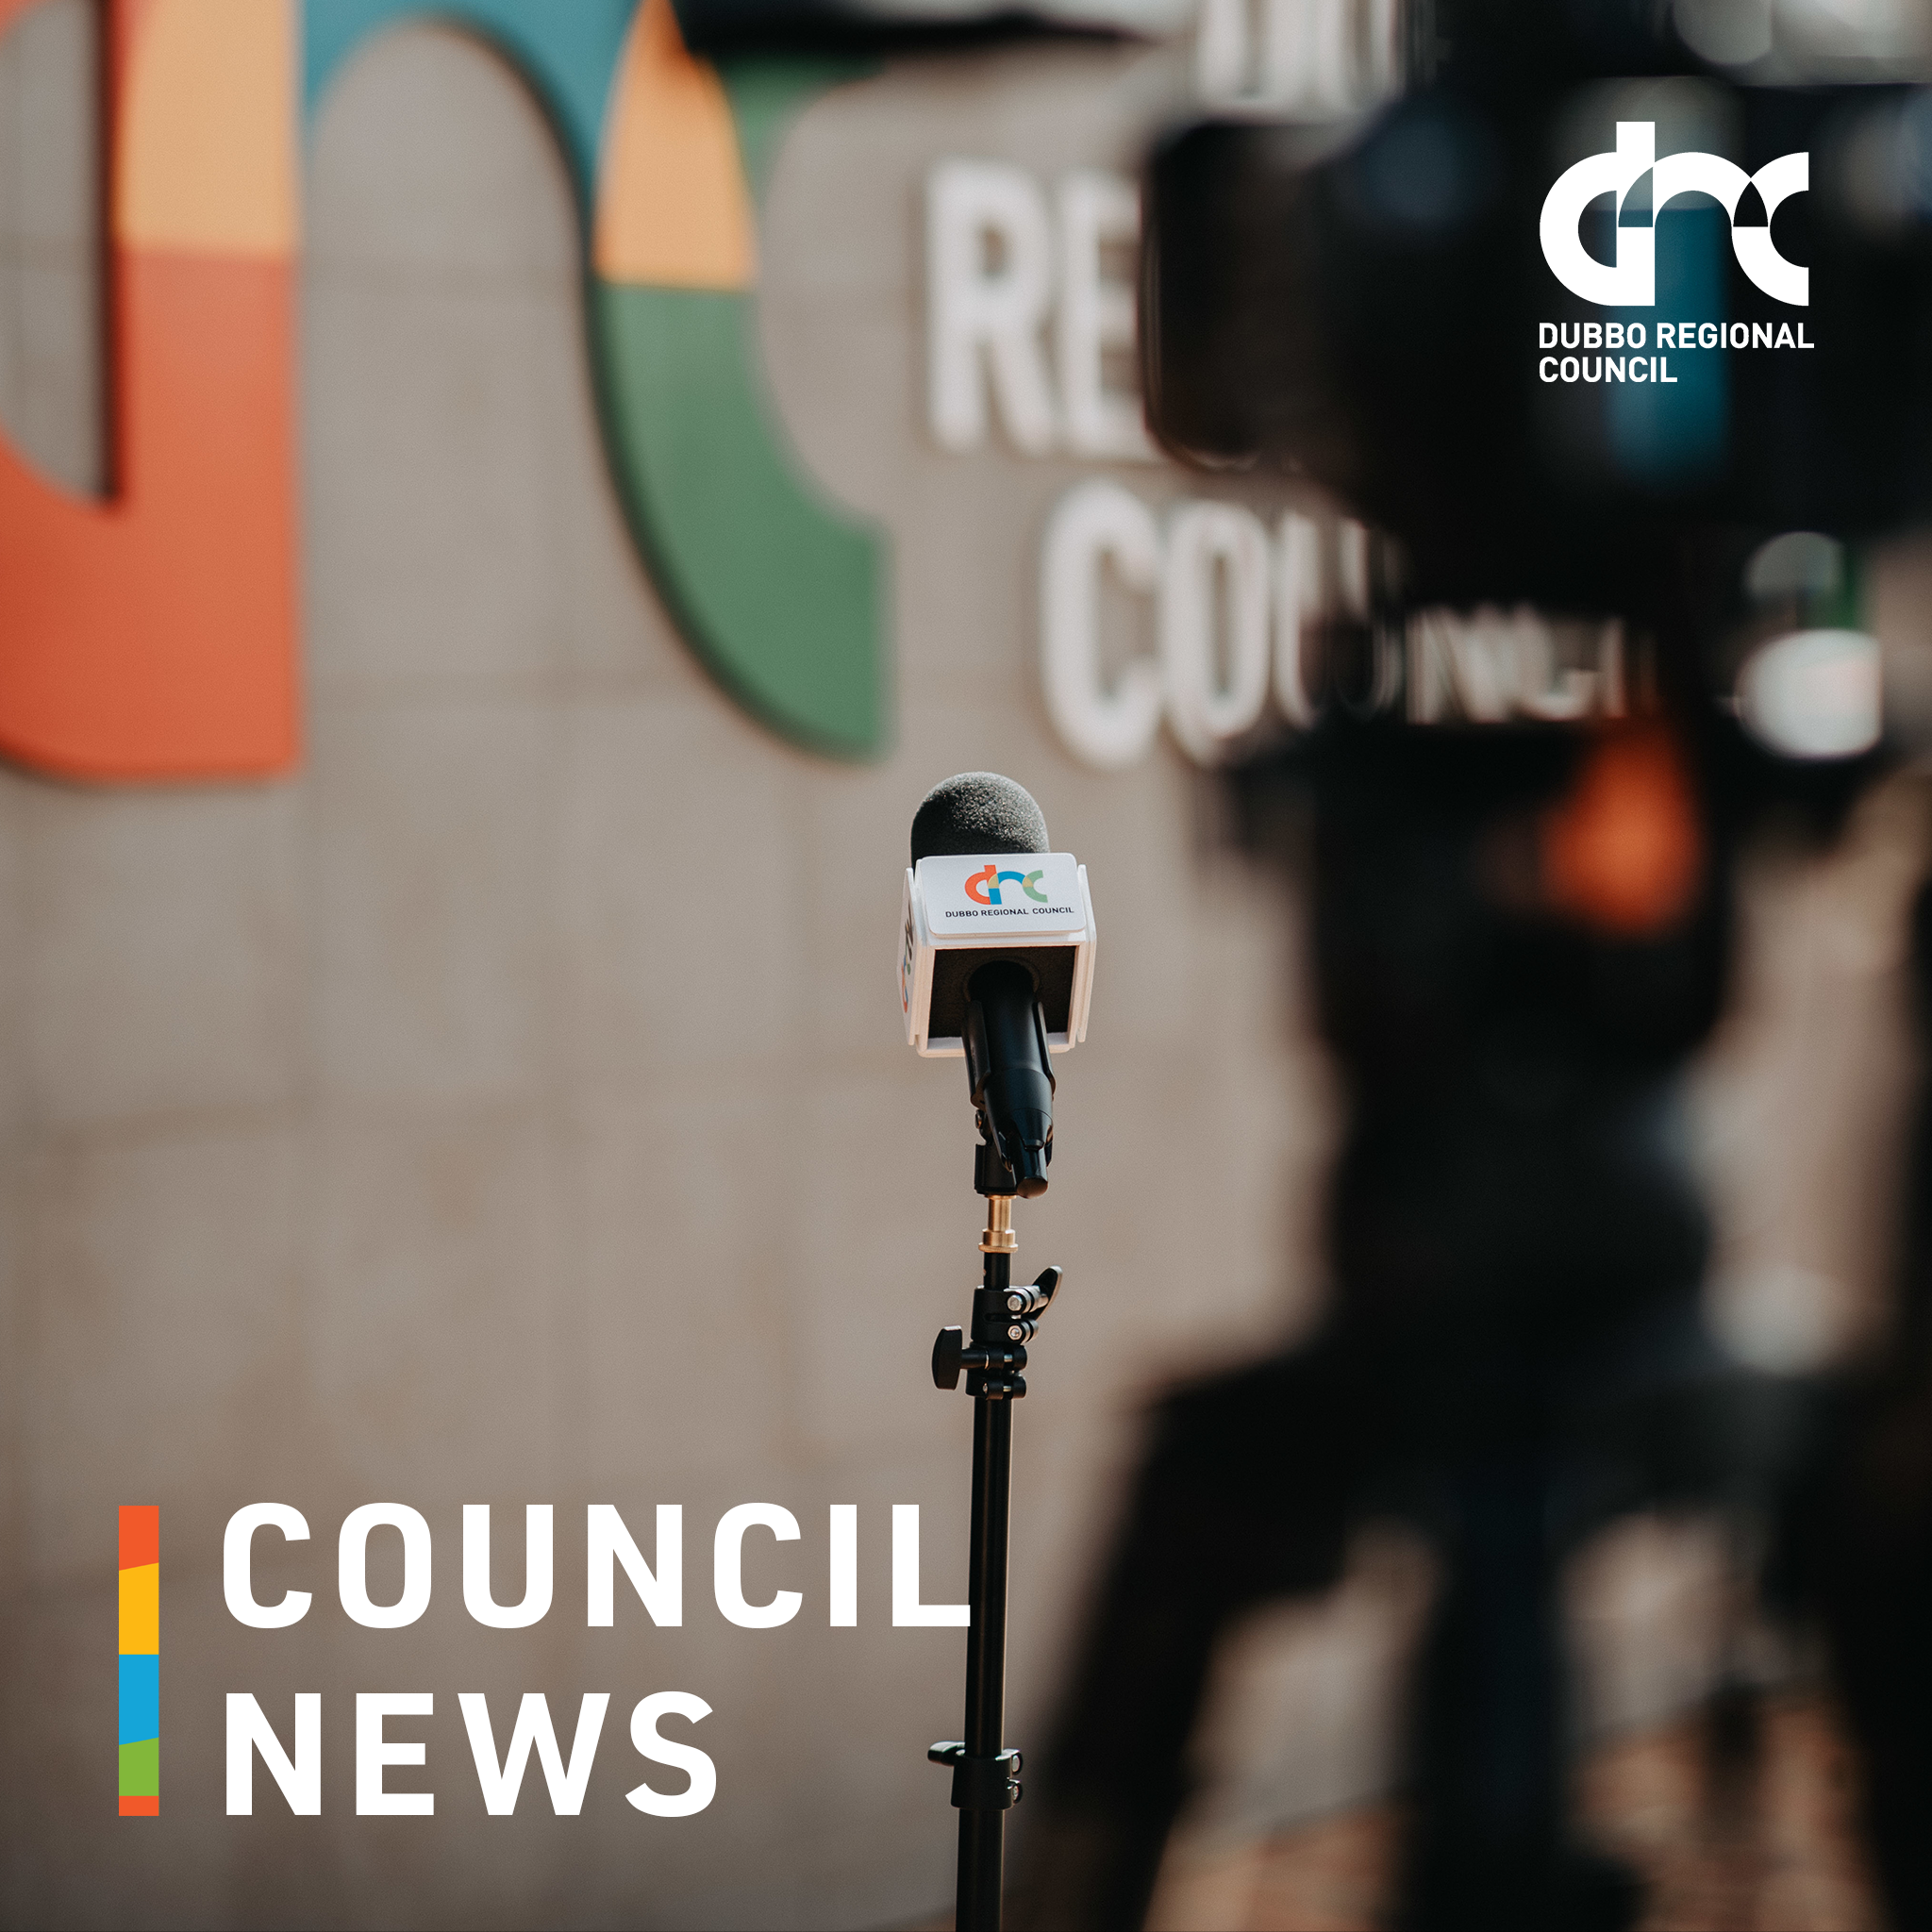 Council News